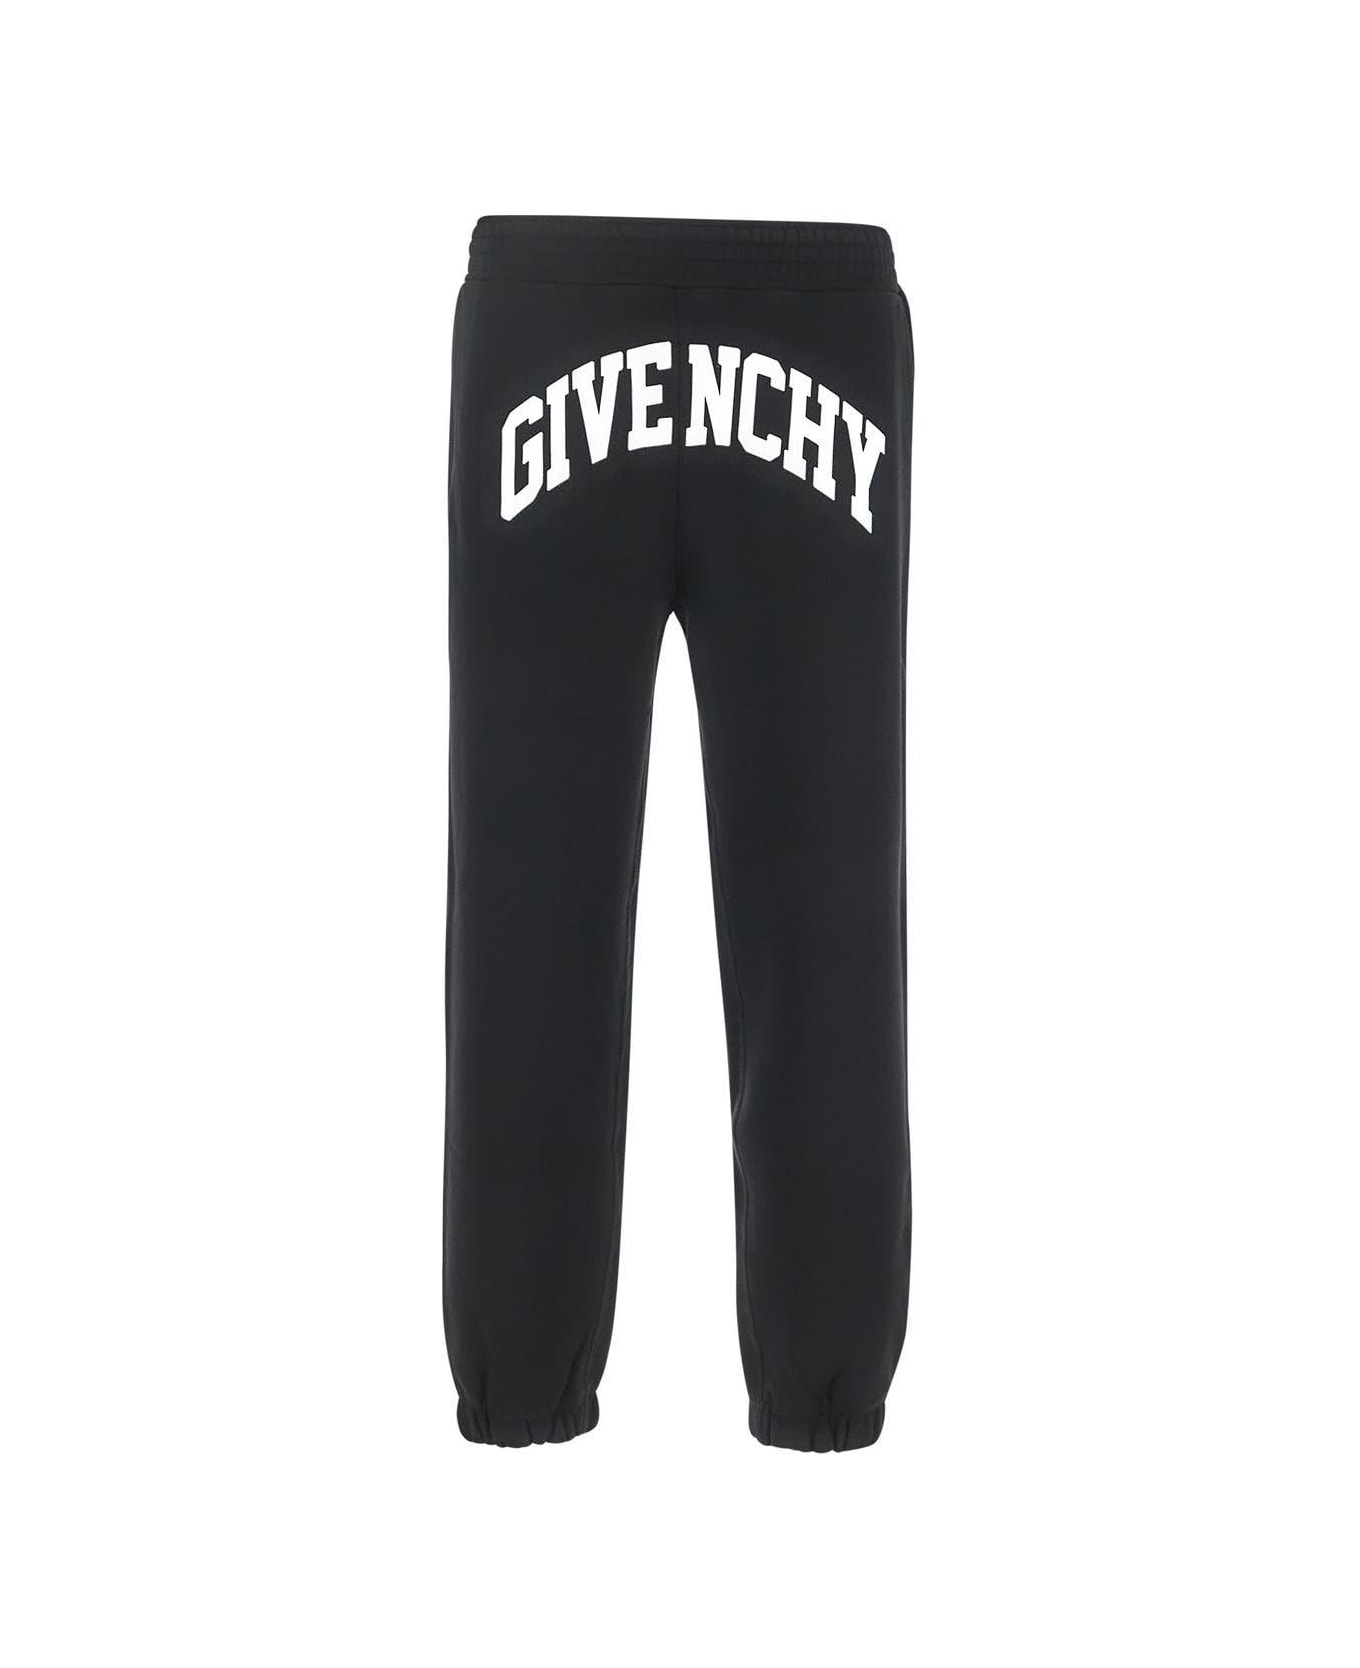 Givenchy Black Sweatpants - Black スウェットパンツ